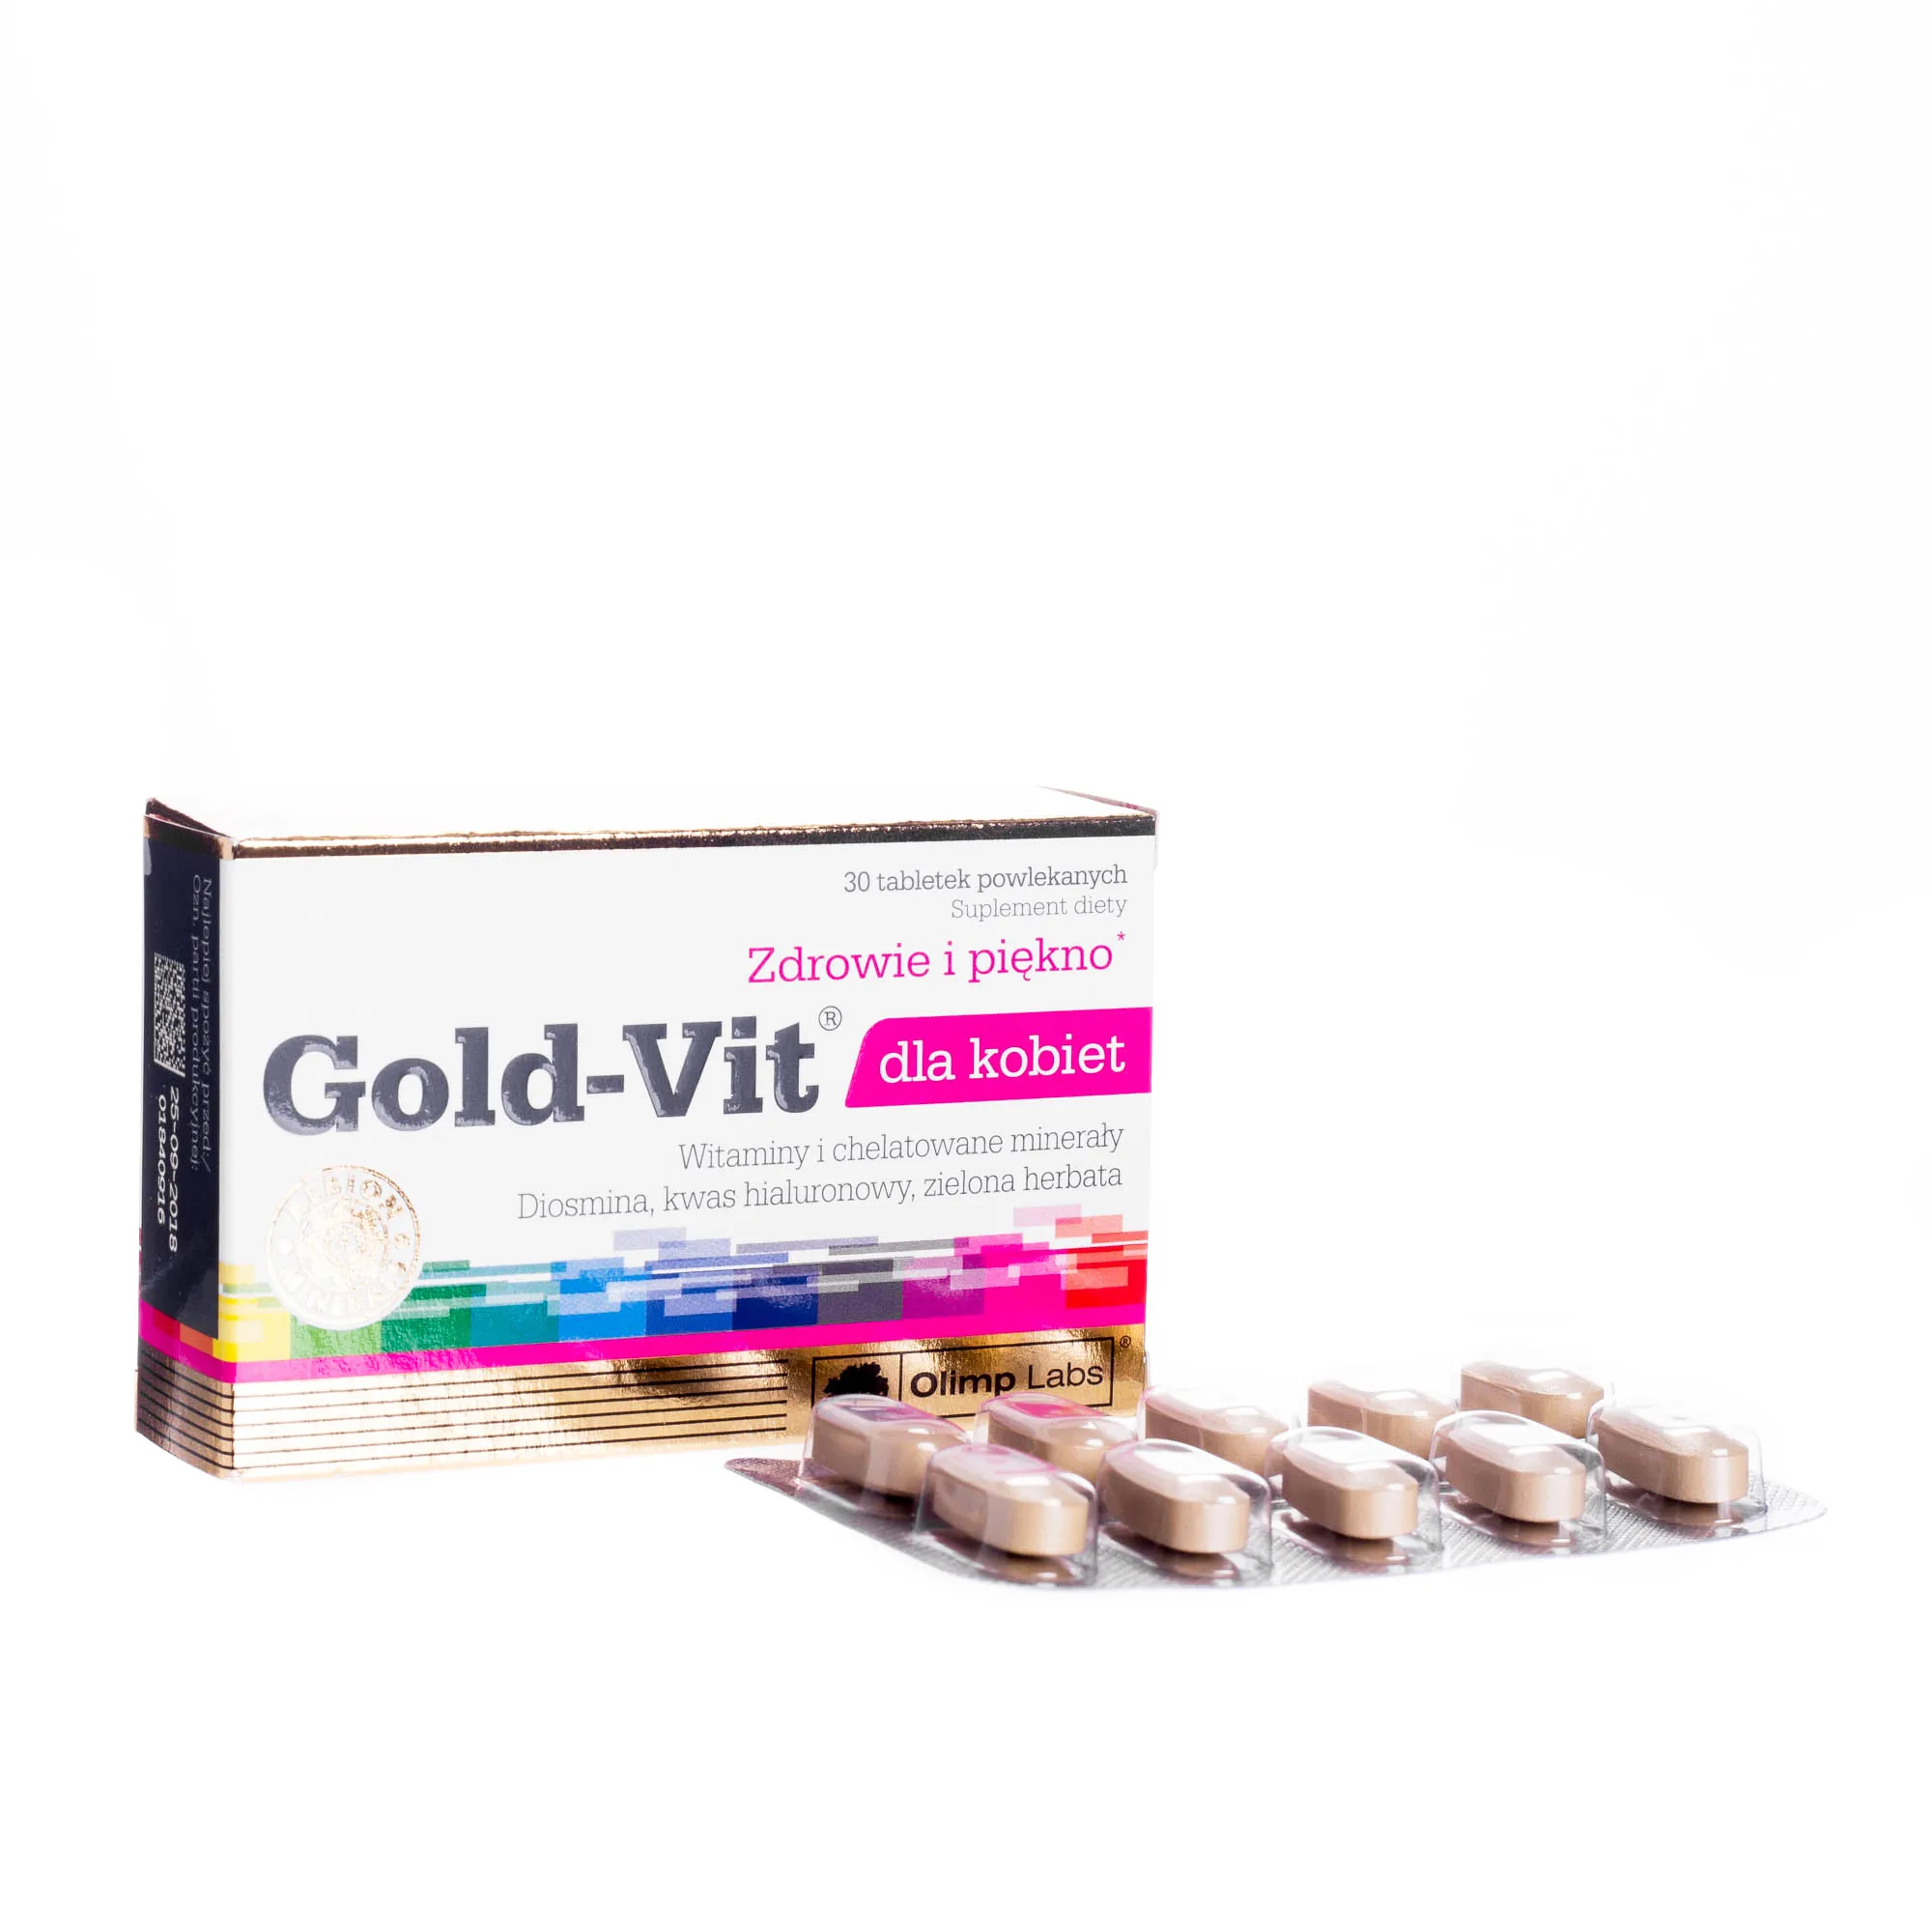 Olimp Gold-Vit dla kobiet, suplement diety, 30 tabletek powlekanych